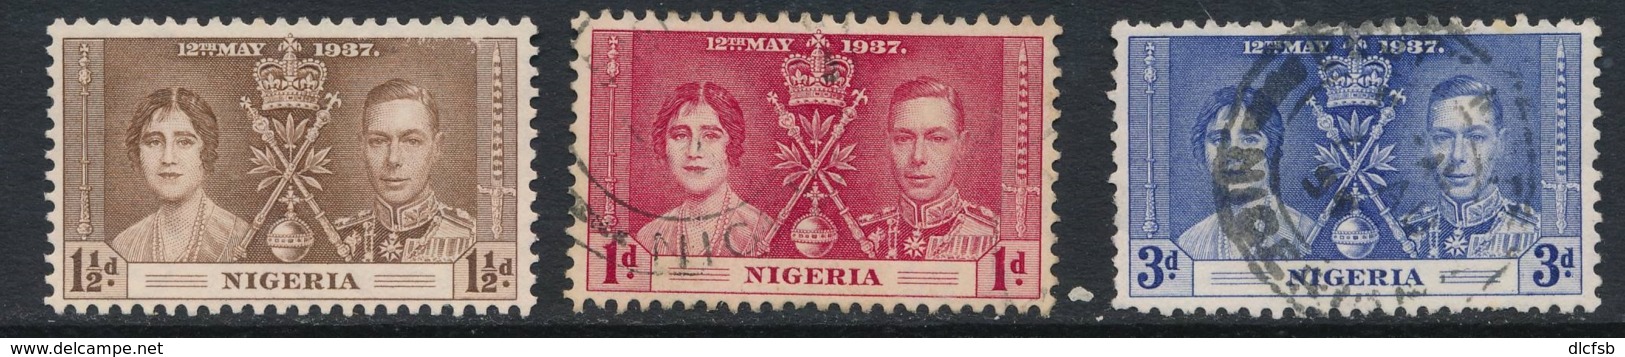 NIGERIA, 1937 Coronation  Very Fine Used, Cat £11 - Nigeria (...-1960)